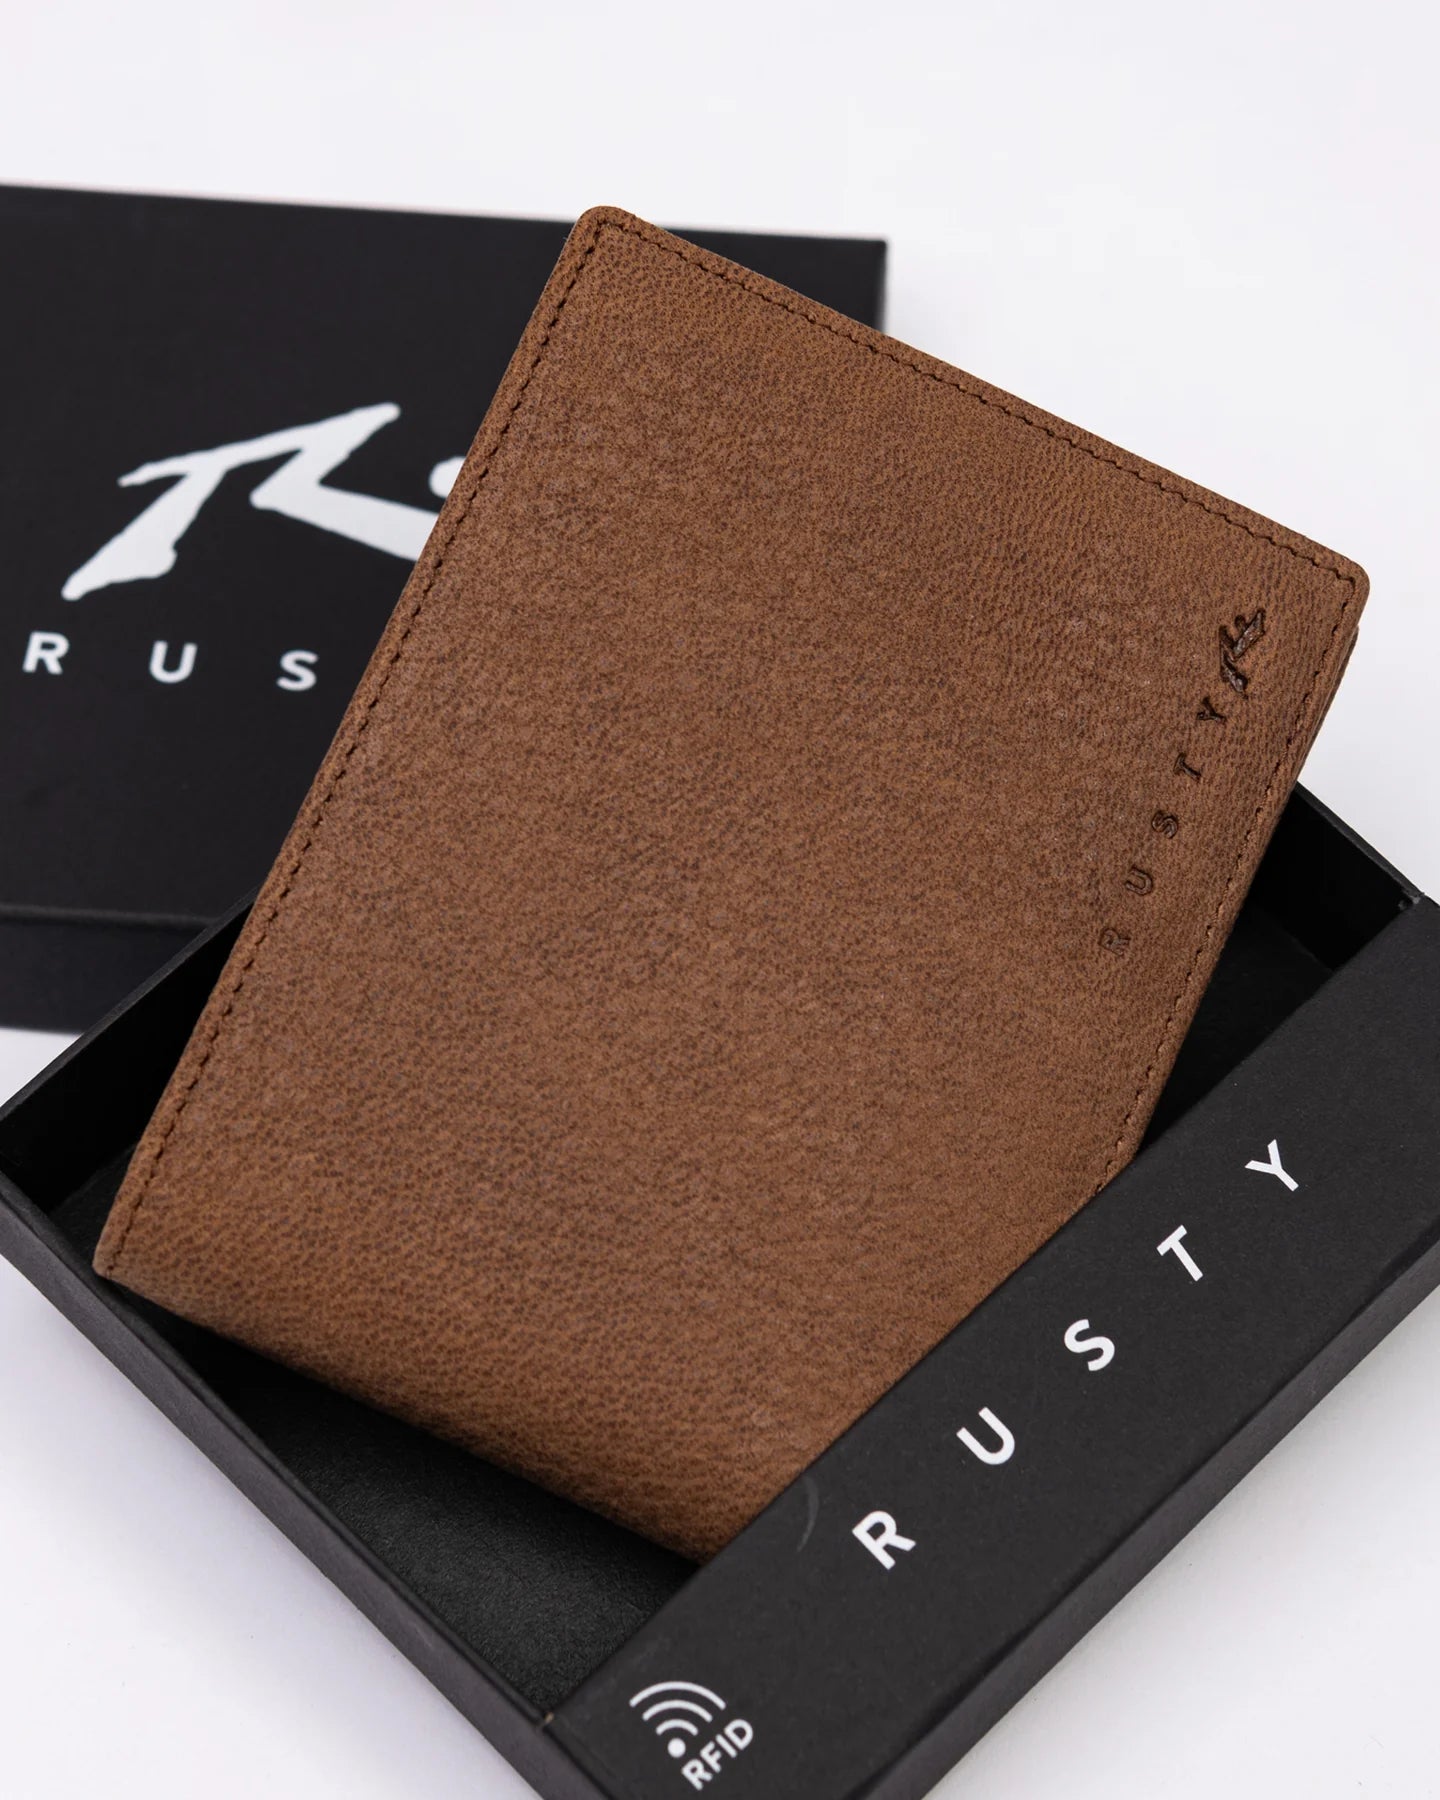 Rusty High River 2 Leather Wallet - Dark Tan